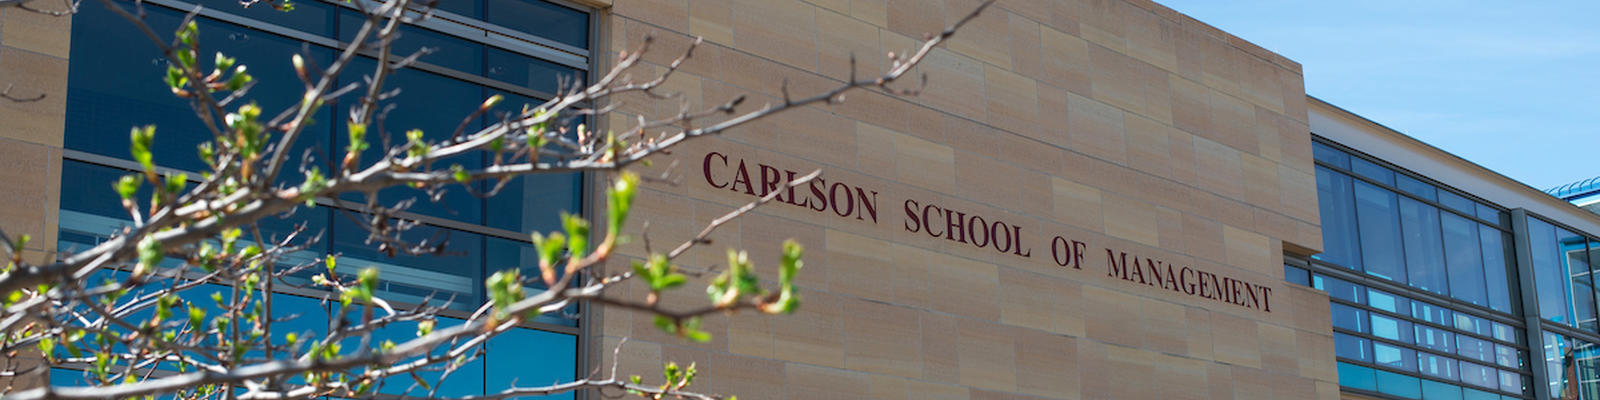 Carlson School of Management Building